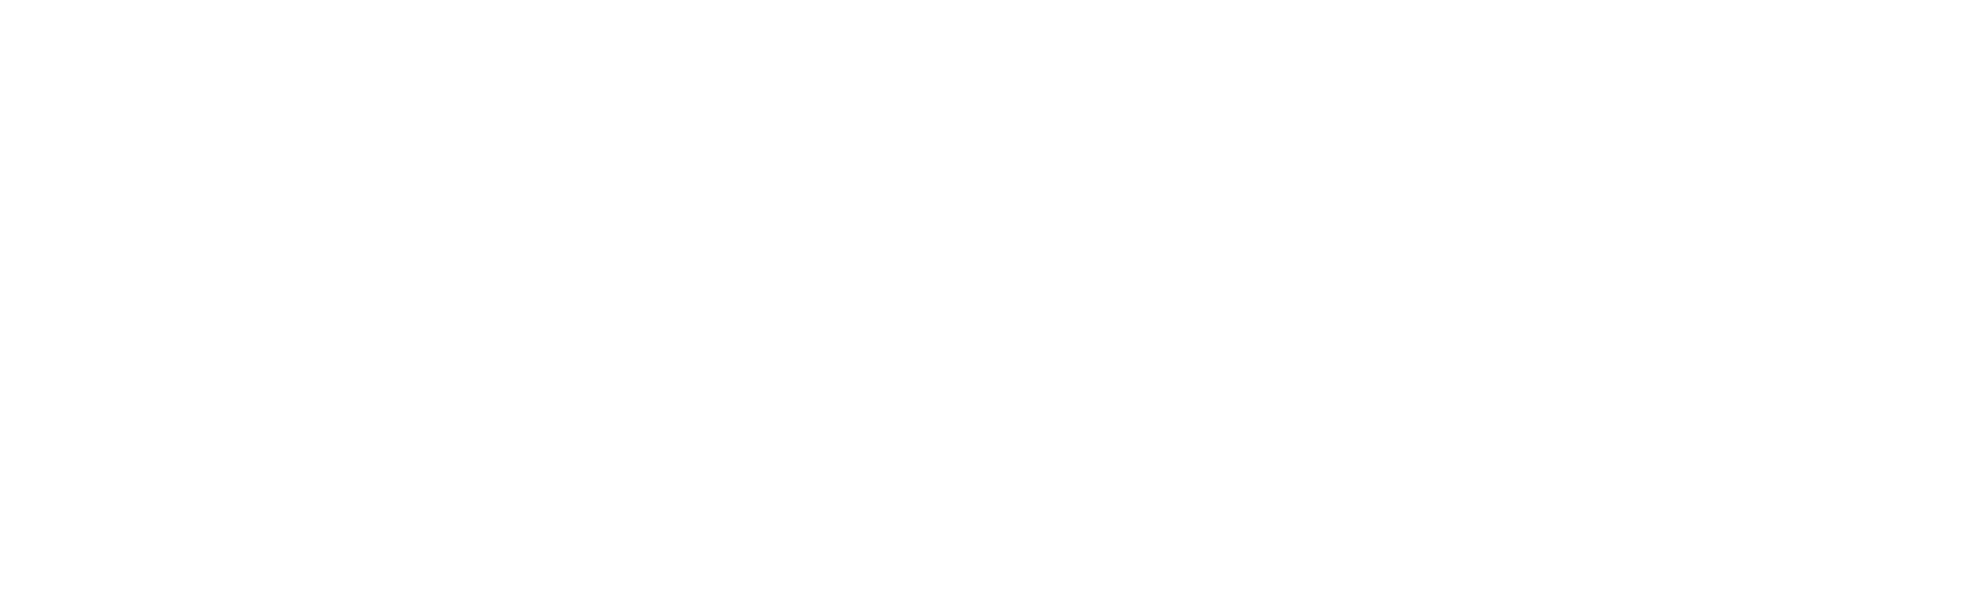 Medidex Connect